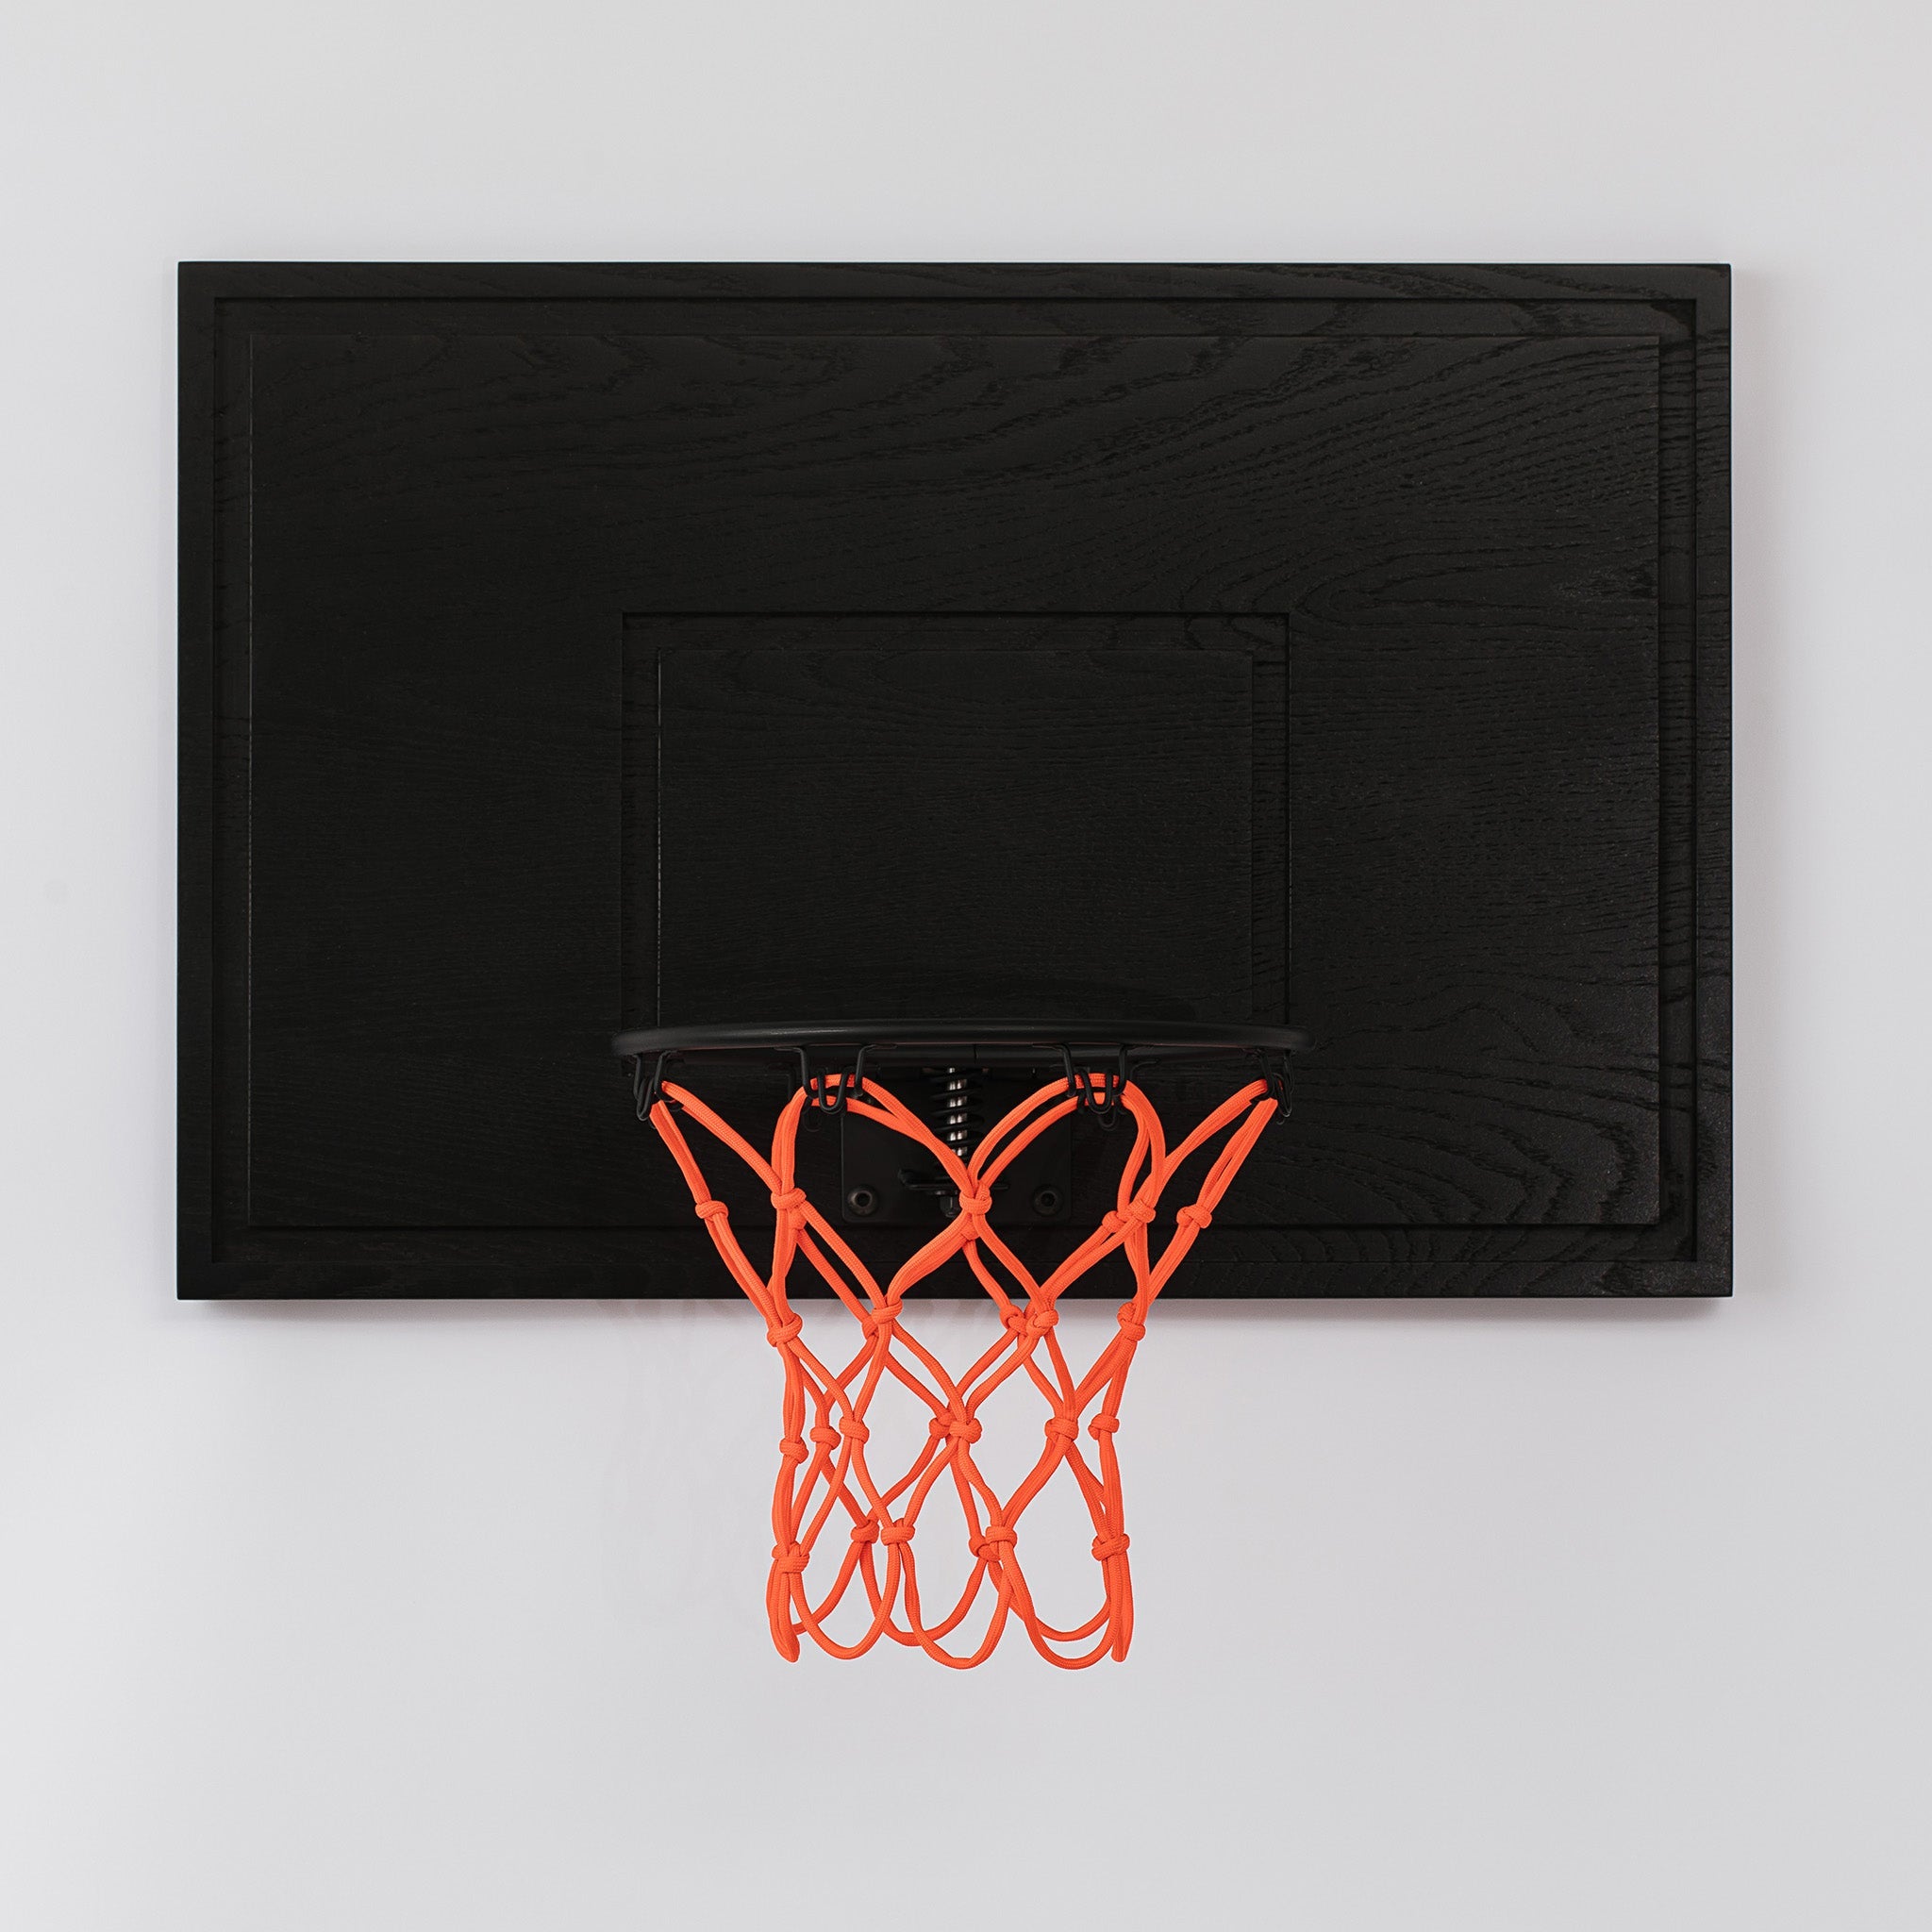 Wall mounted mini basketball hoop with black rubber odd one out mini basketball -black ash